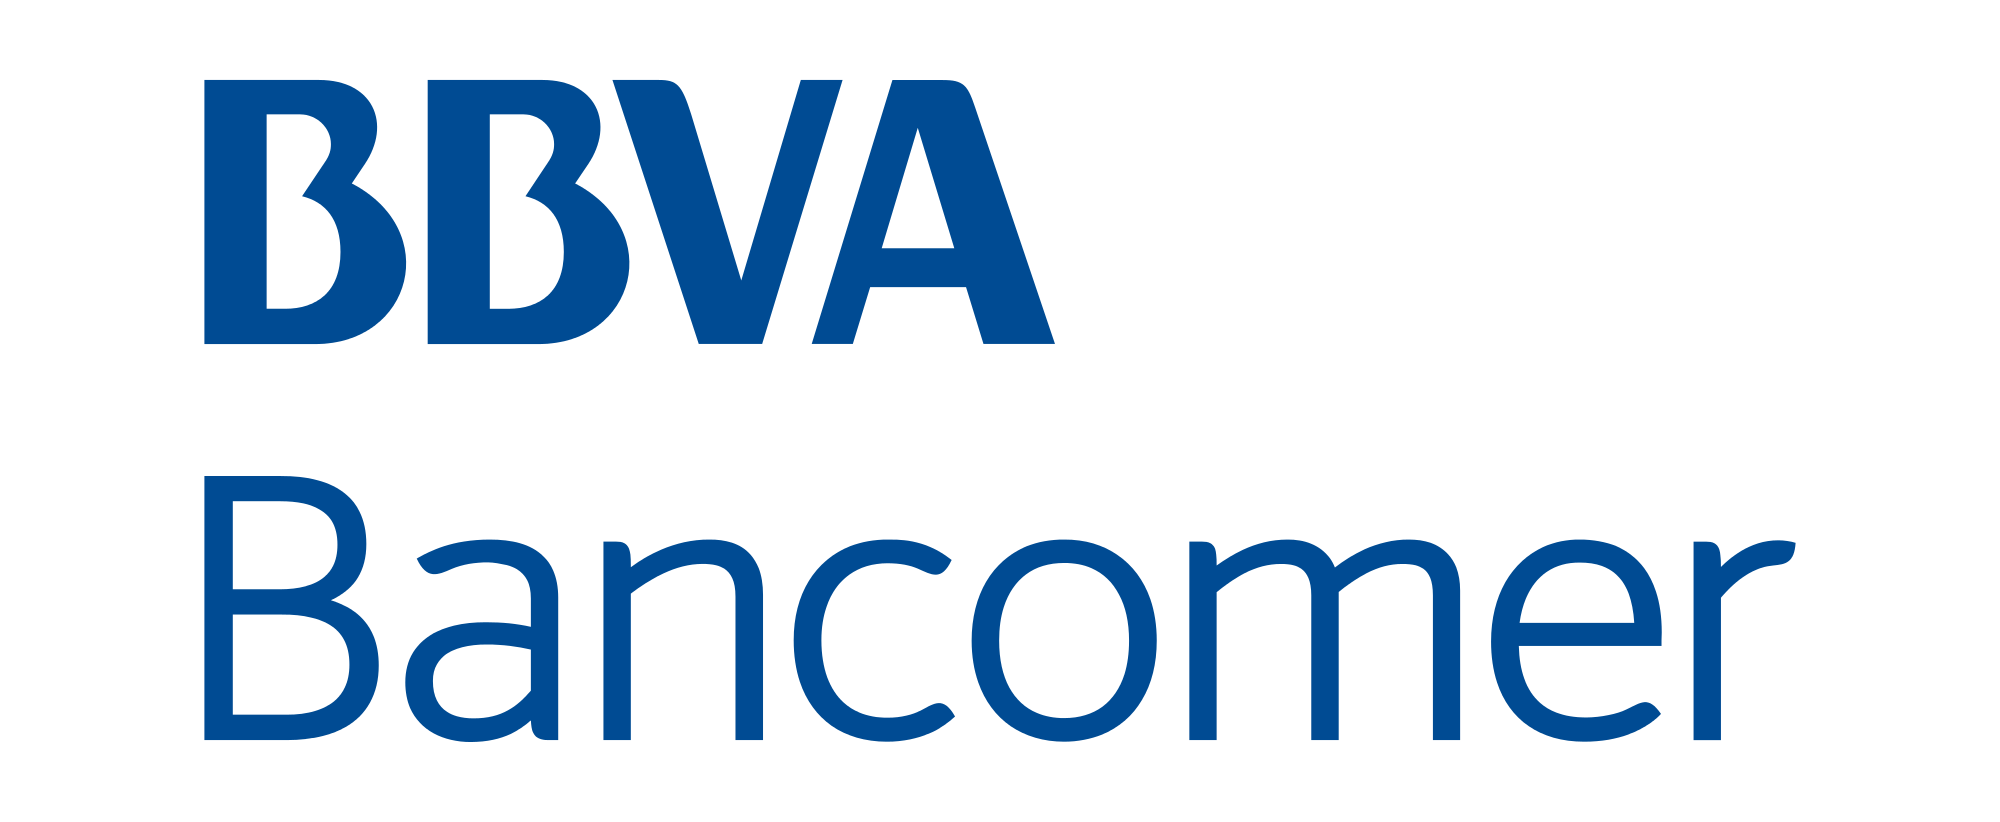 BBVA Bancomer logo